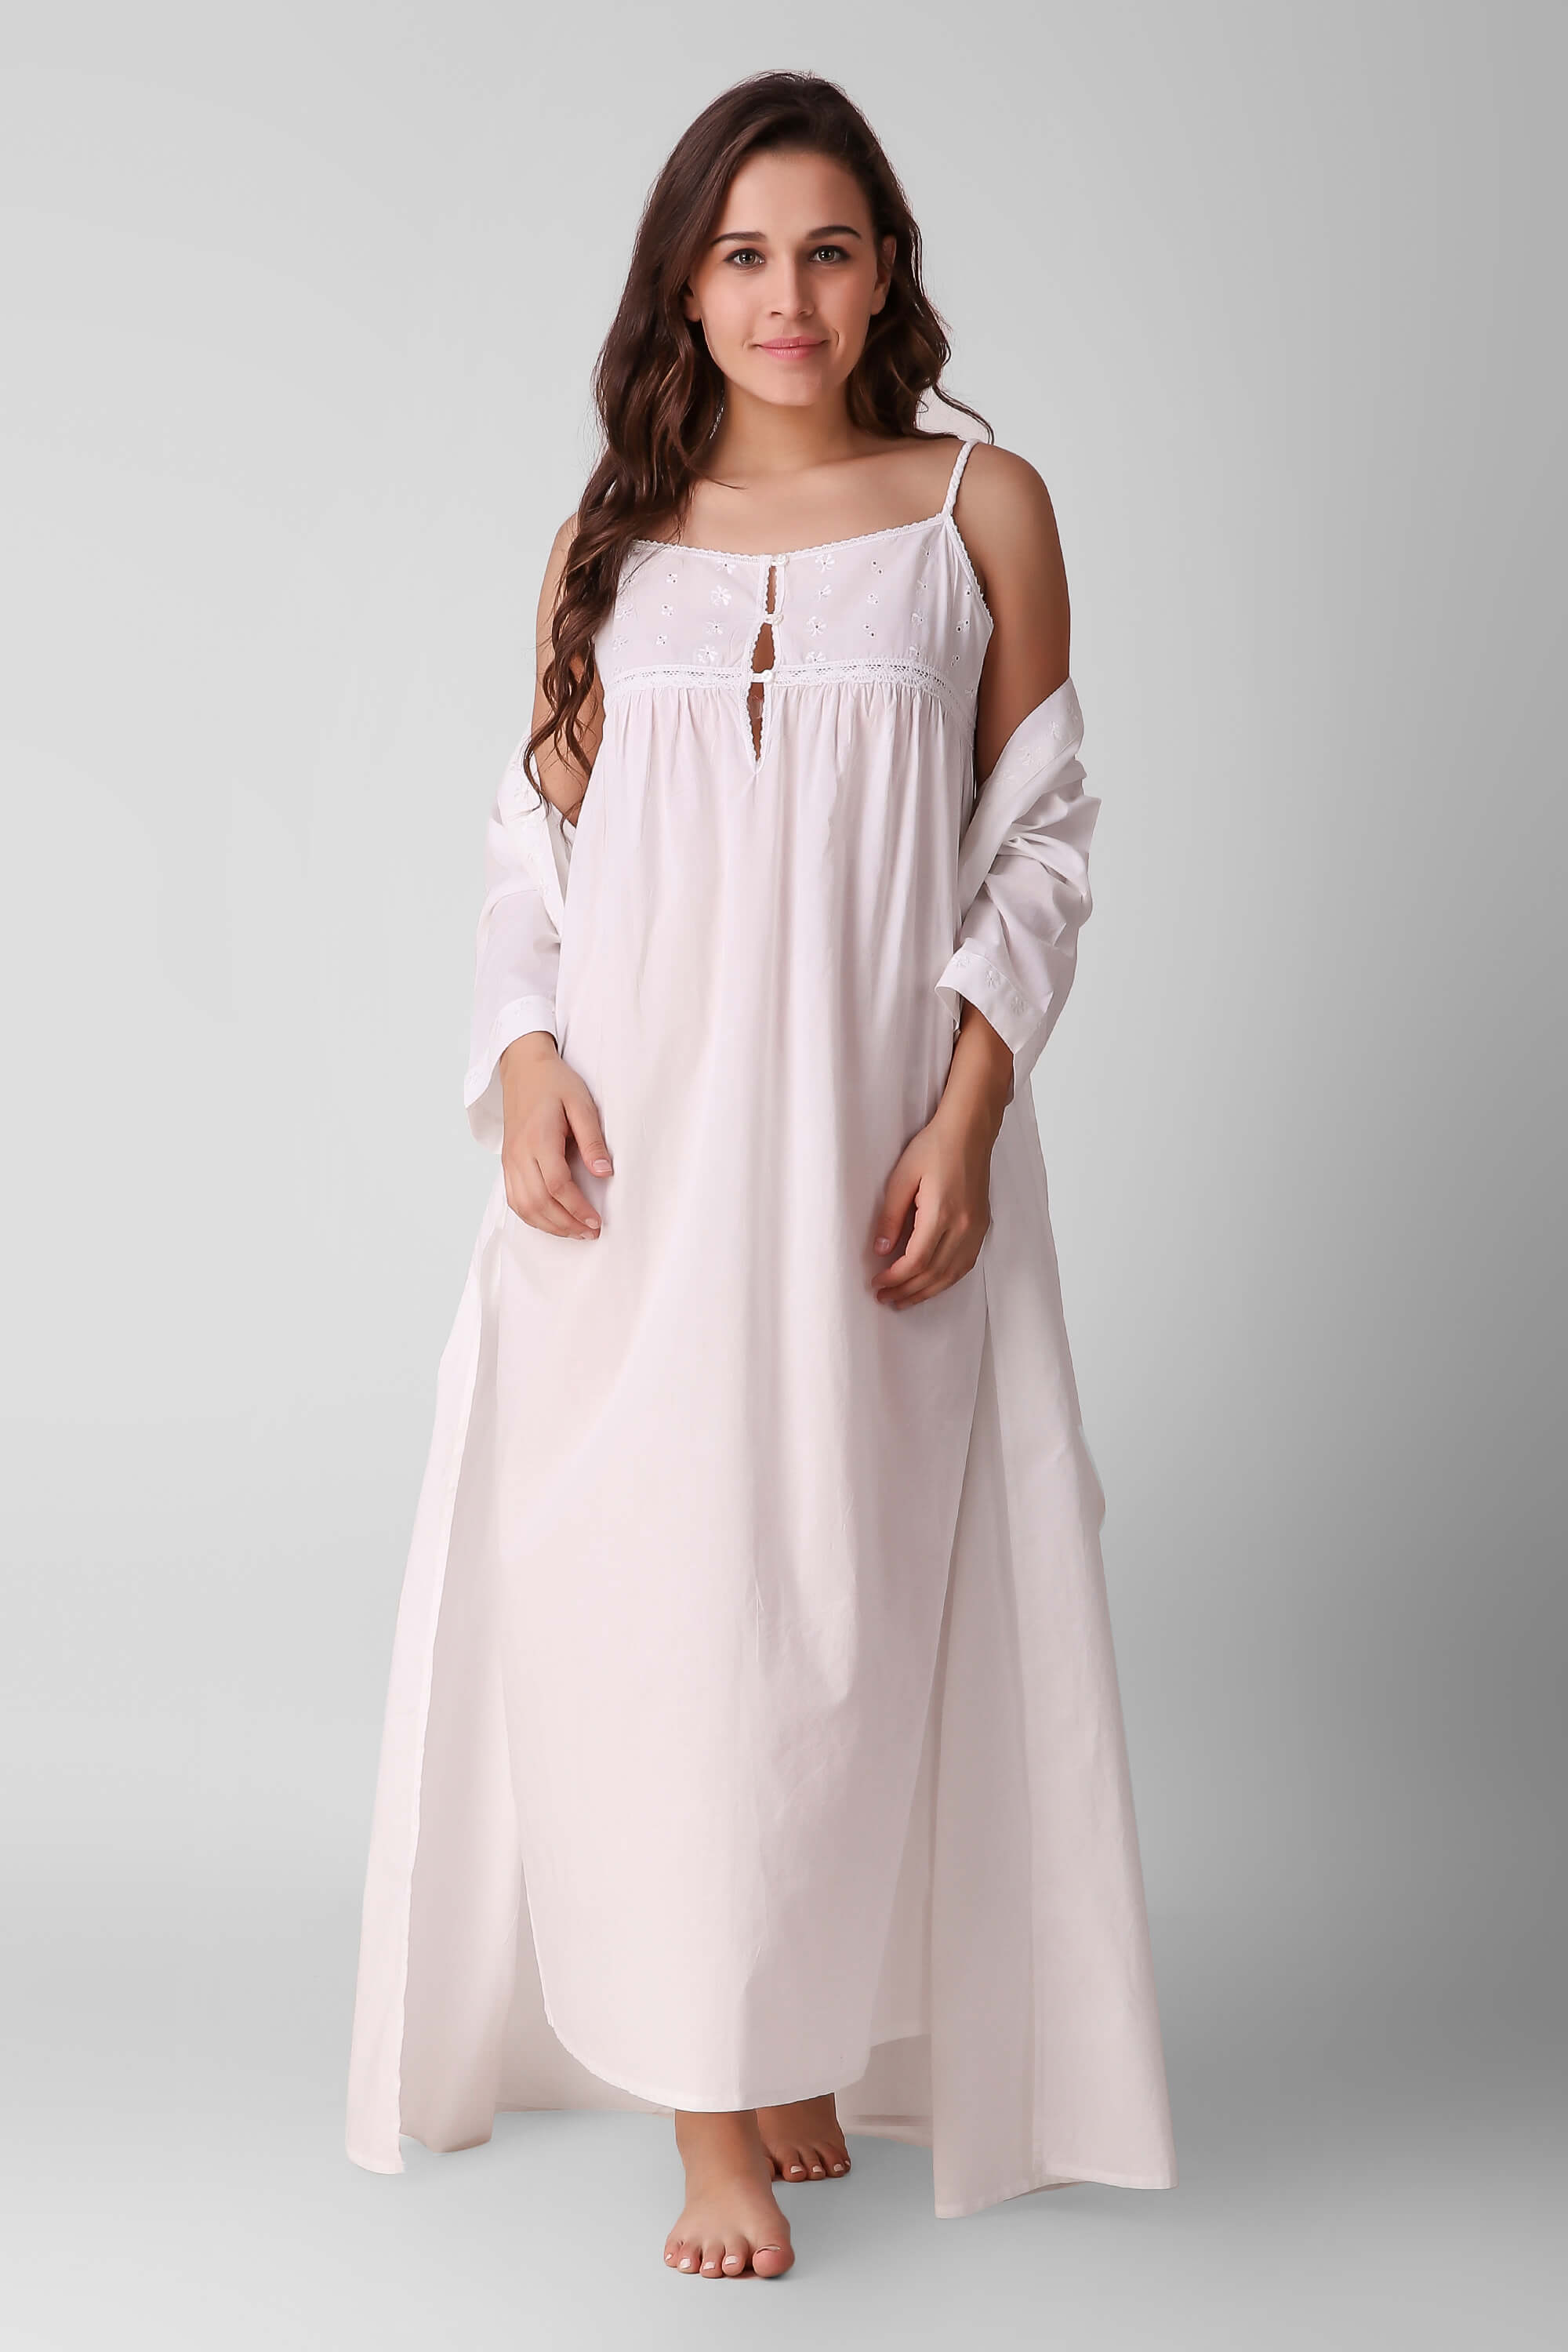 Women's White Nightgowns & Nightshirts | Nordstrom